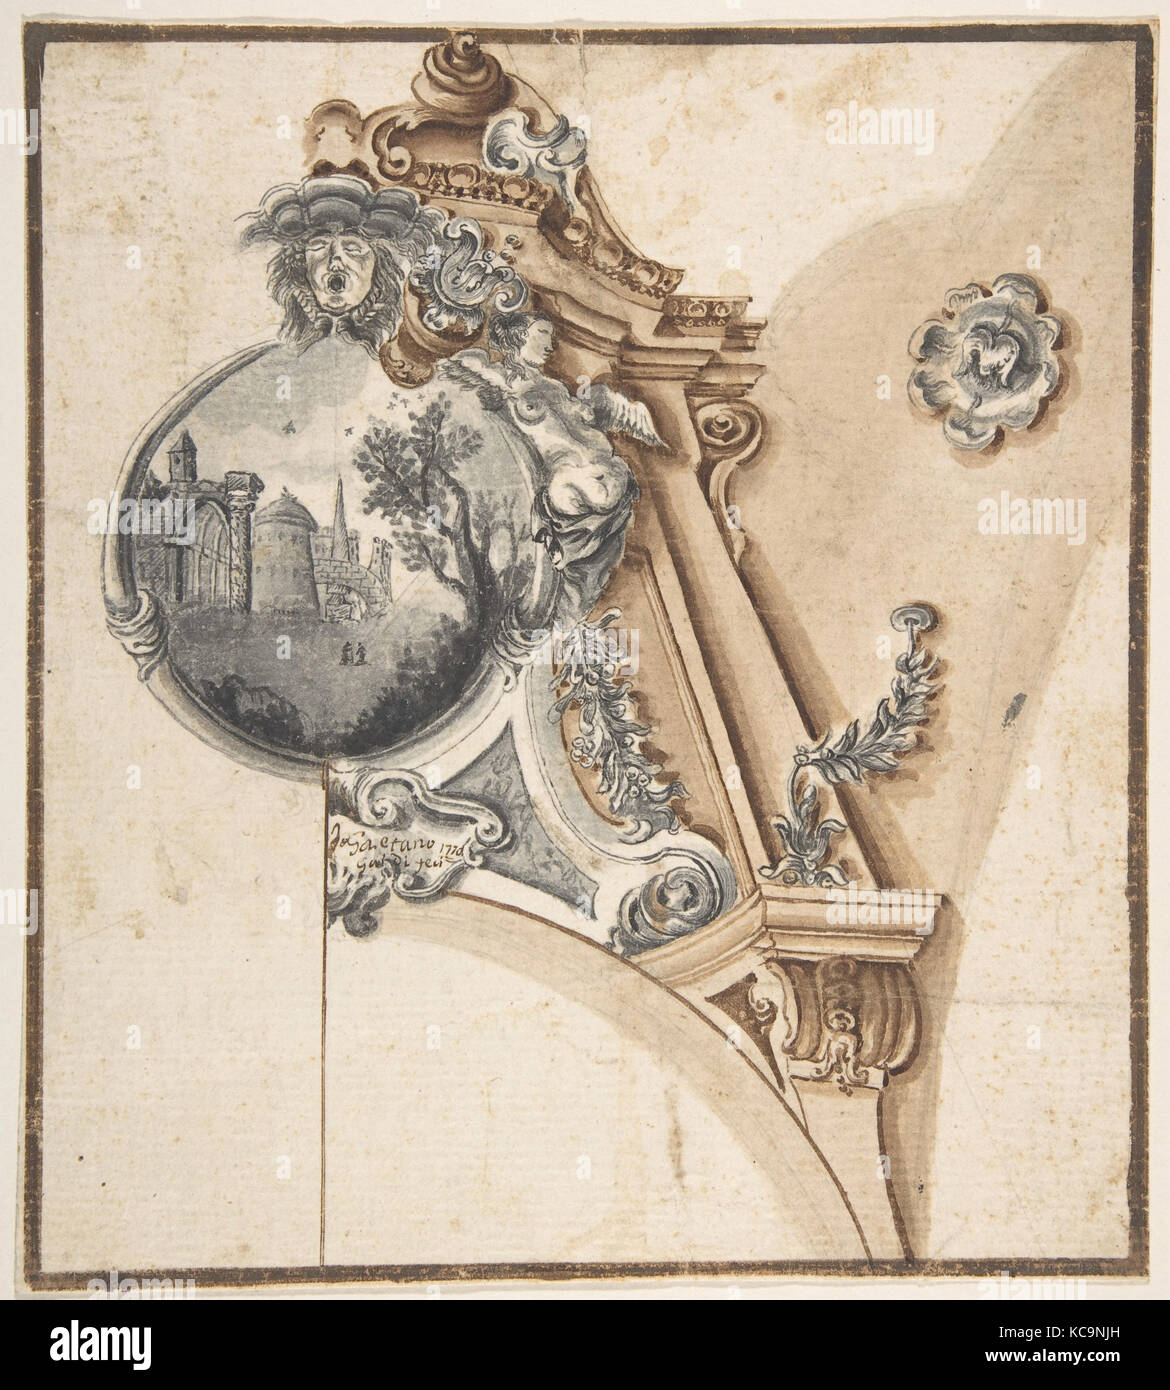 Decoration over an Arch with a Landscape Scene in a Round Compartment, Gaetano Galdi, 177, 1770 Stock Photo